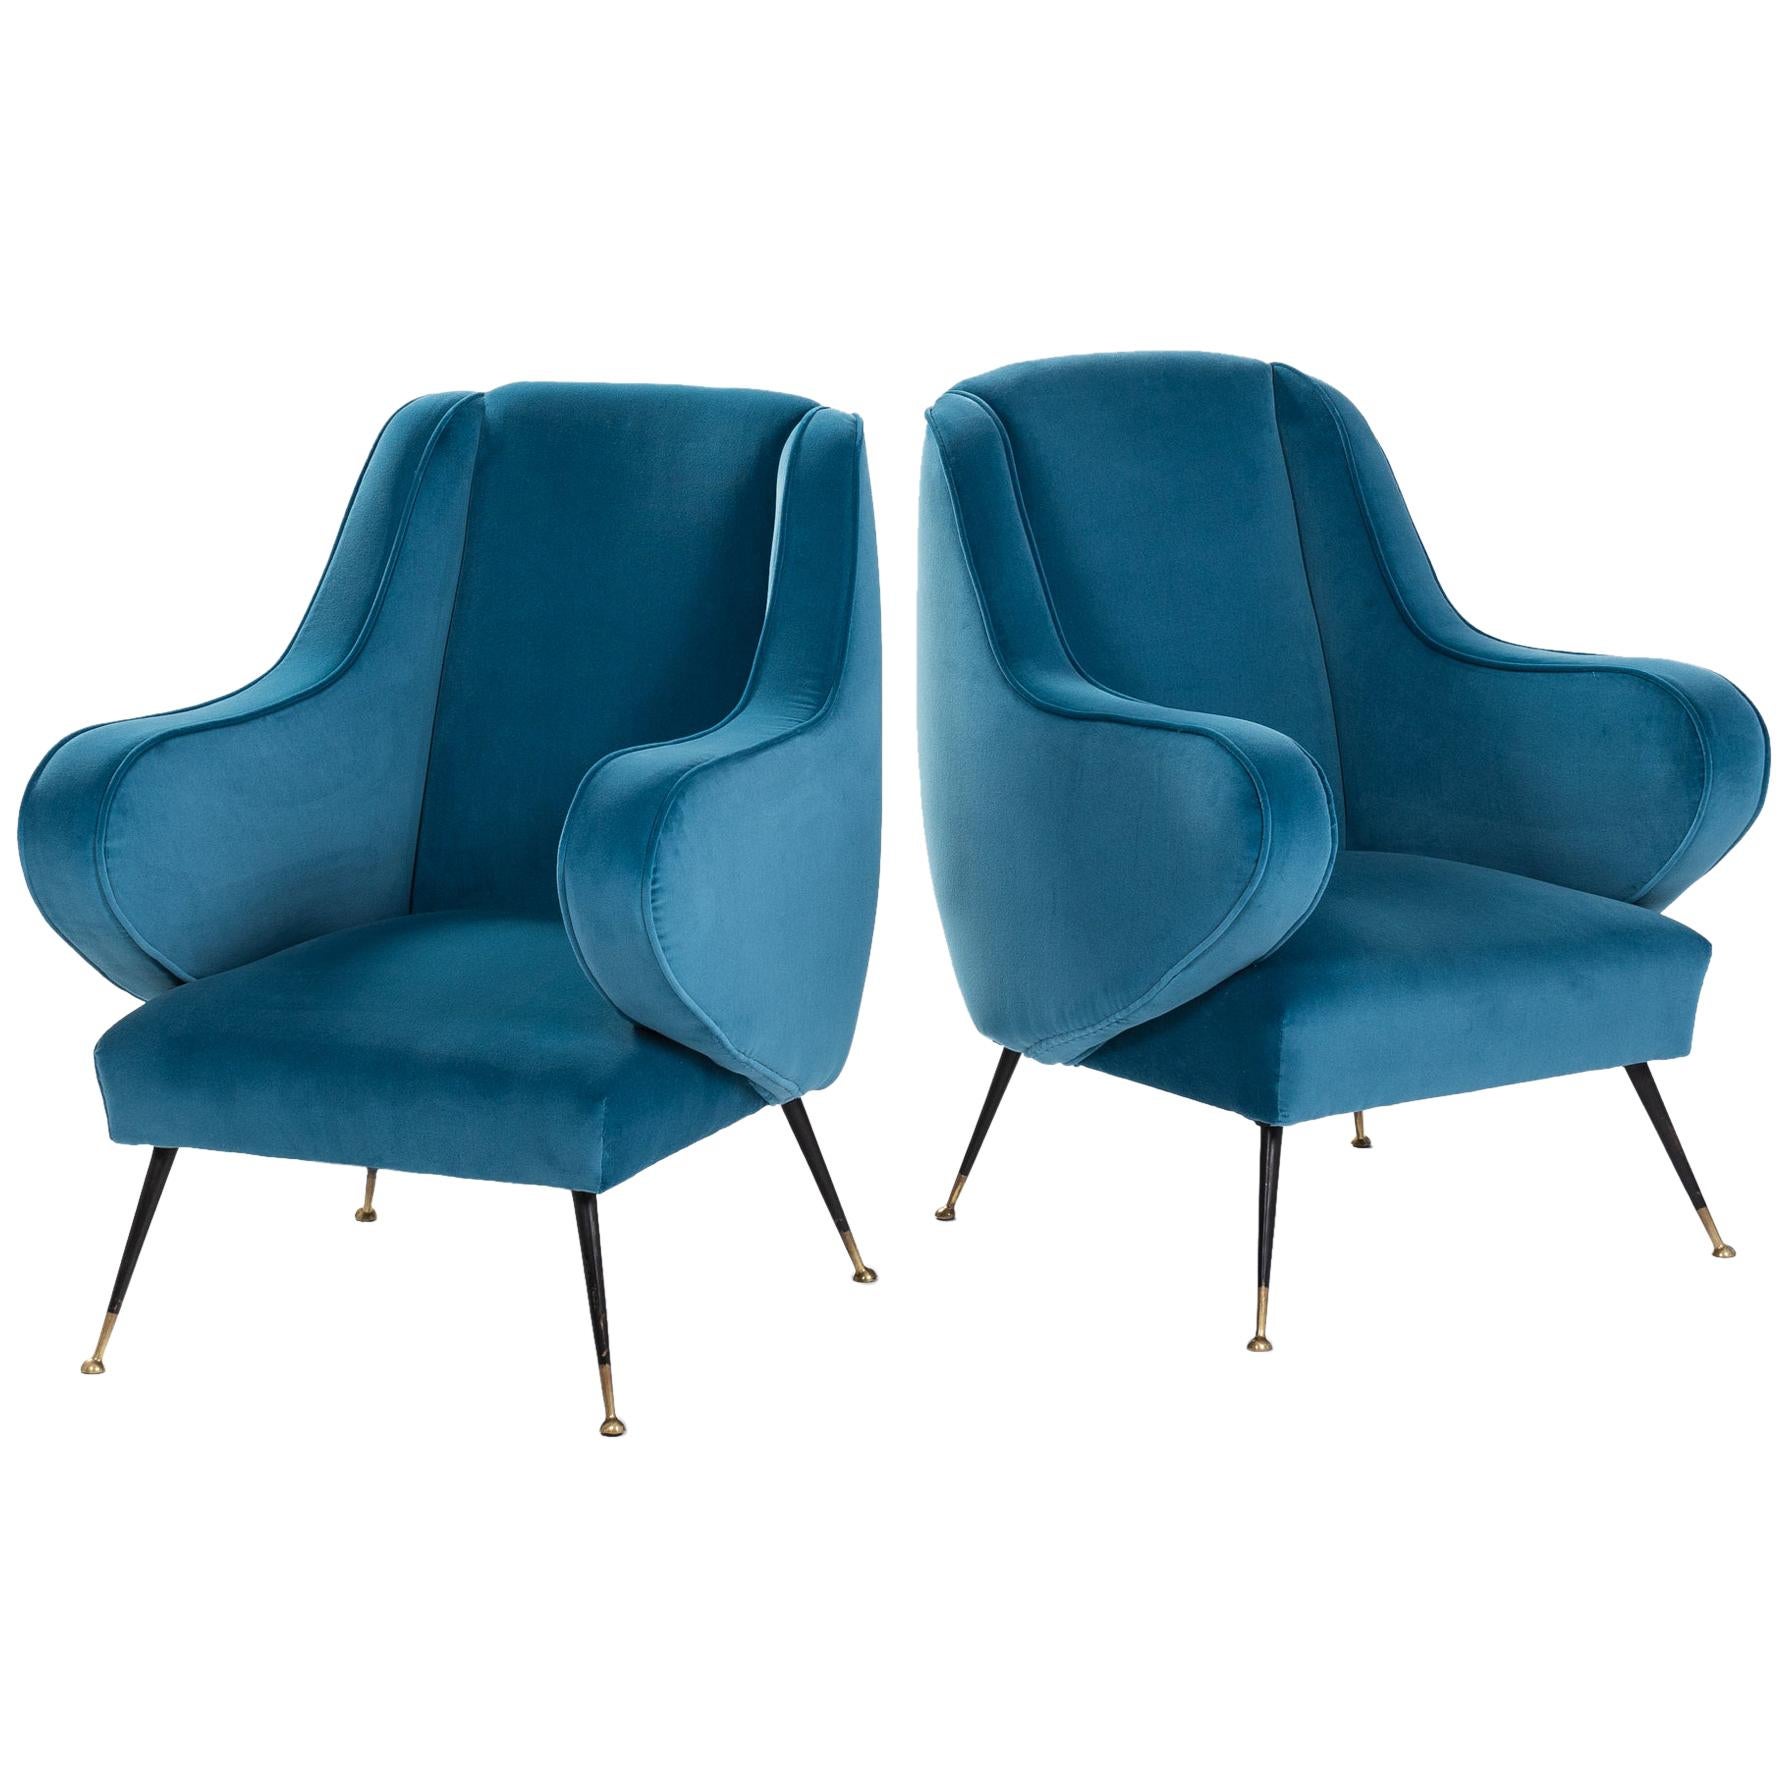 Pair of Italian Midcentury Armchairs Re-Upholsterd in Turquoise Colored Velvet